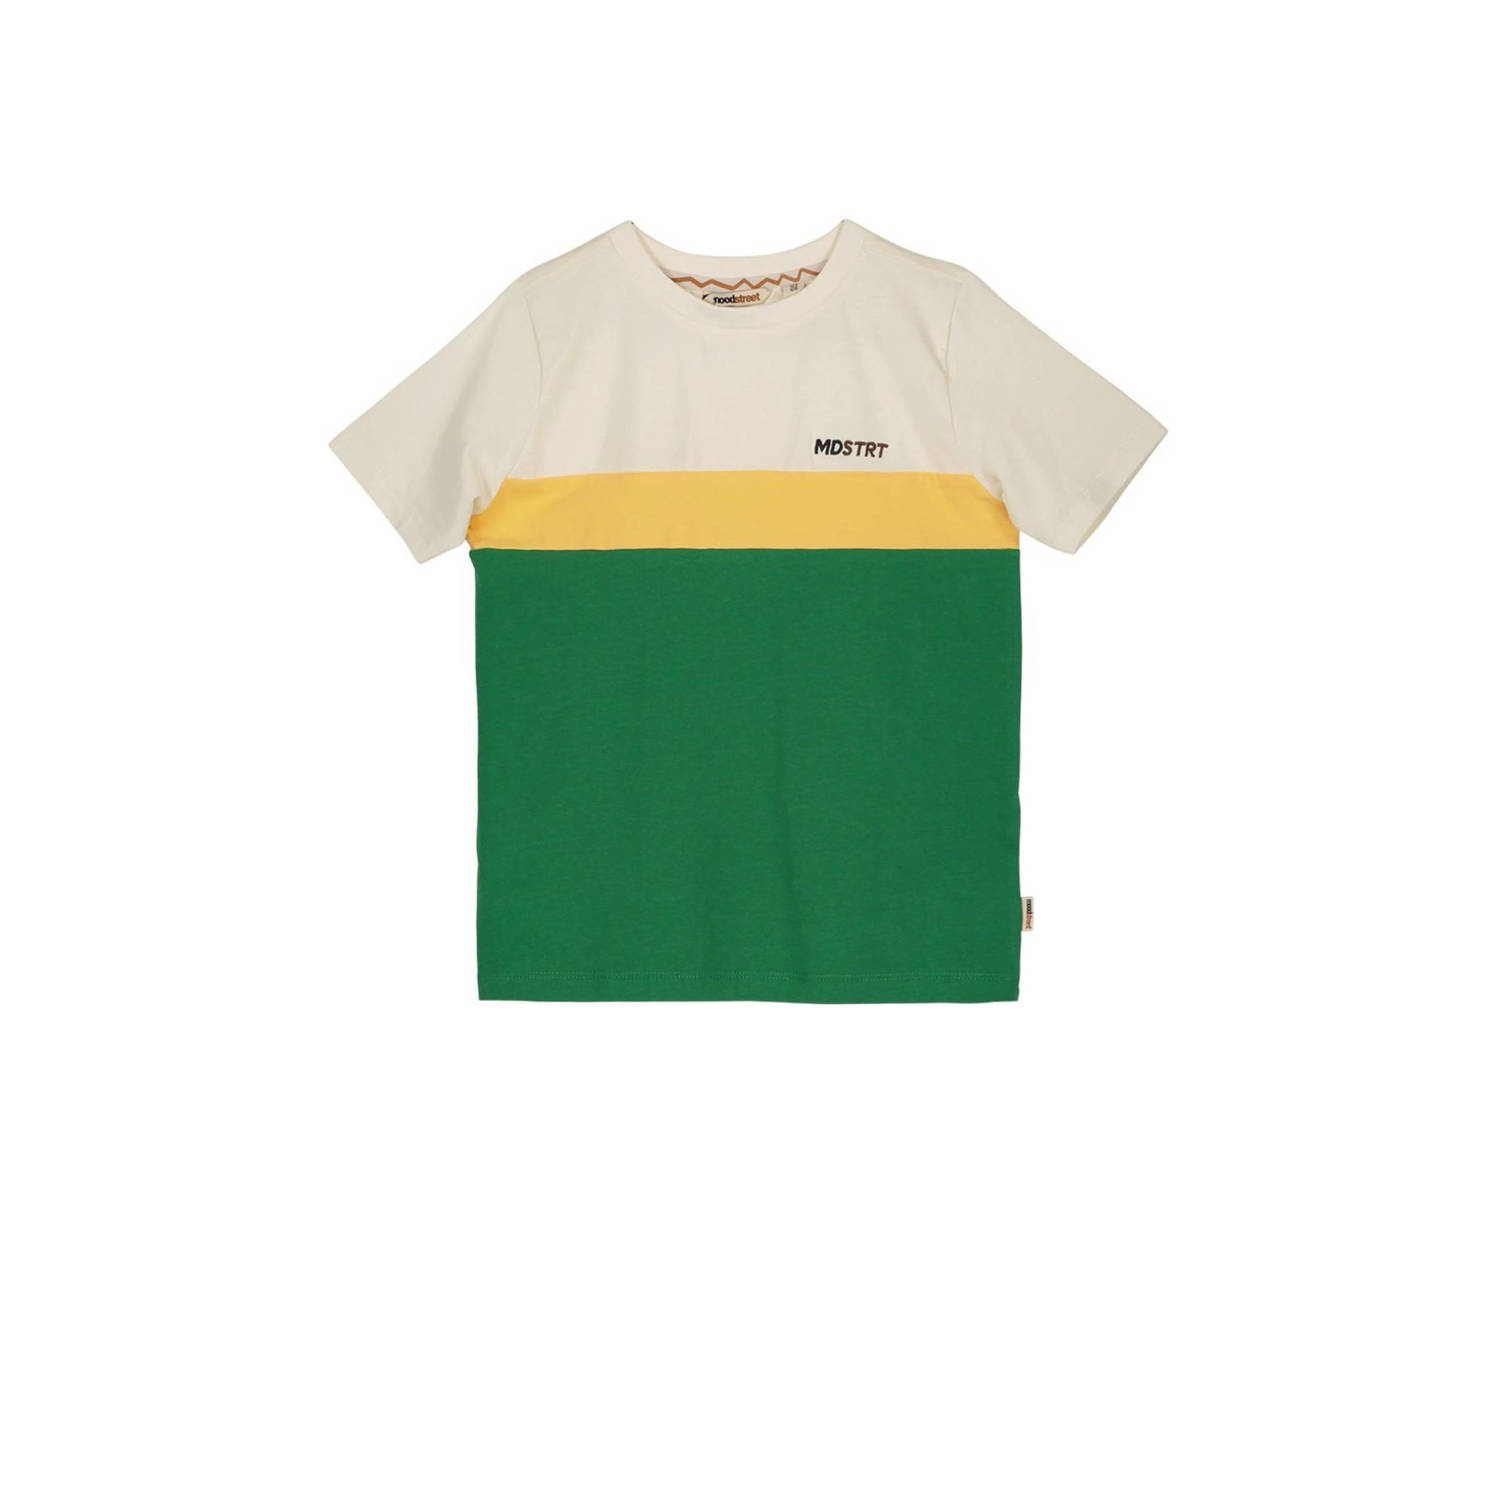 Moodstreet T-shirt groen offwhite geel